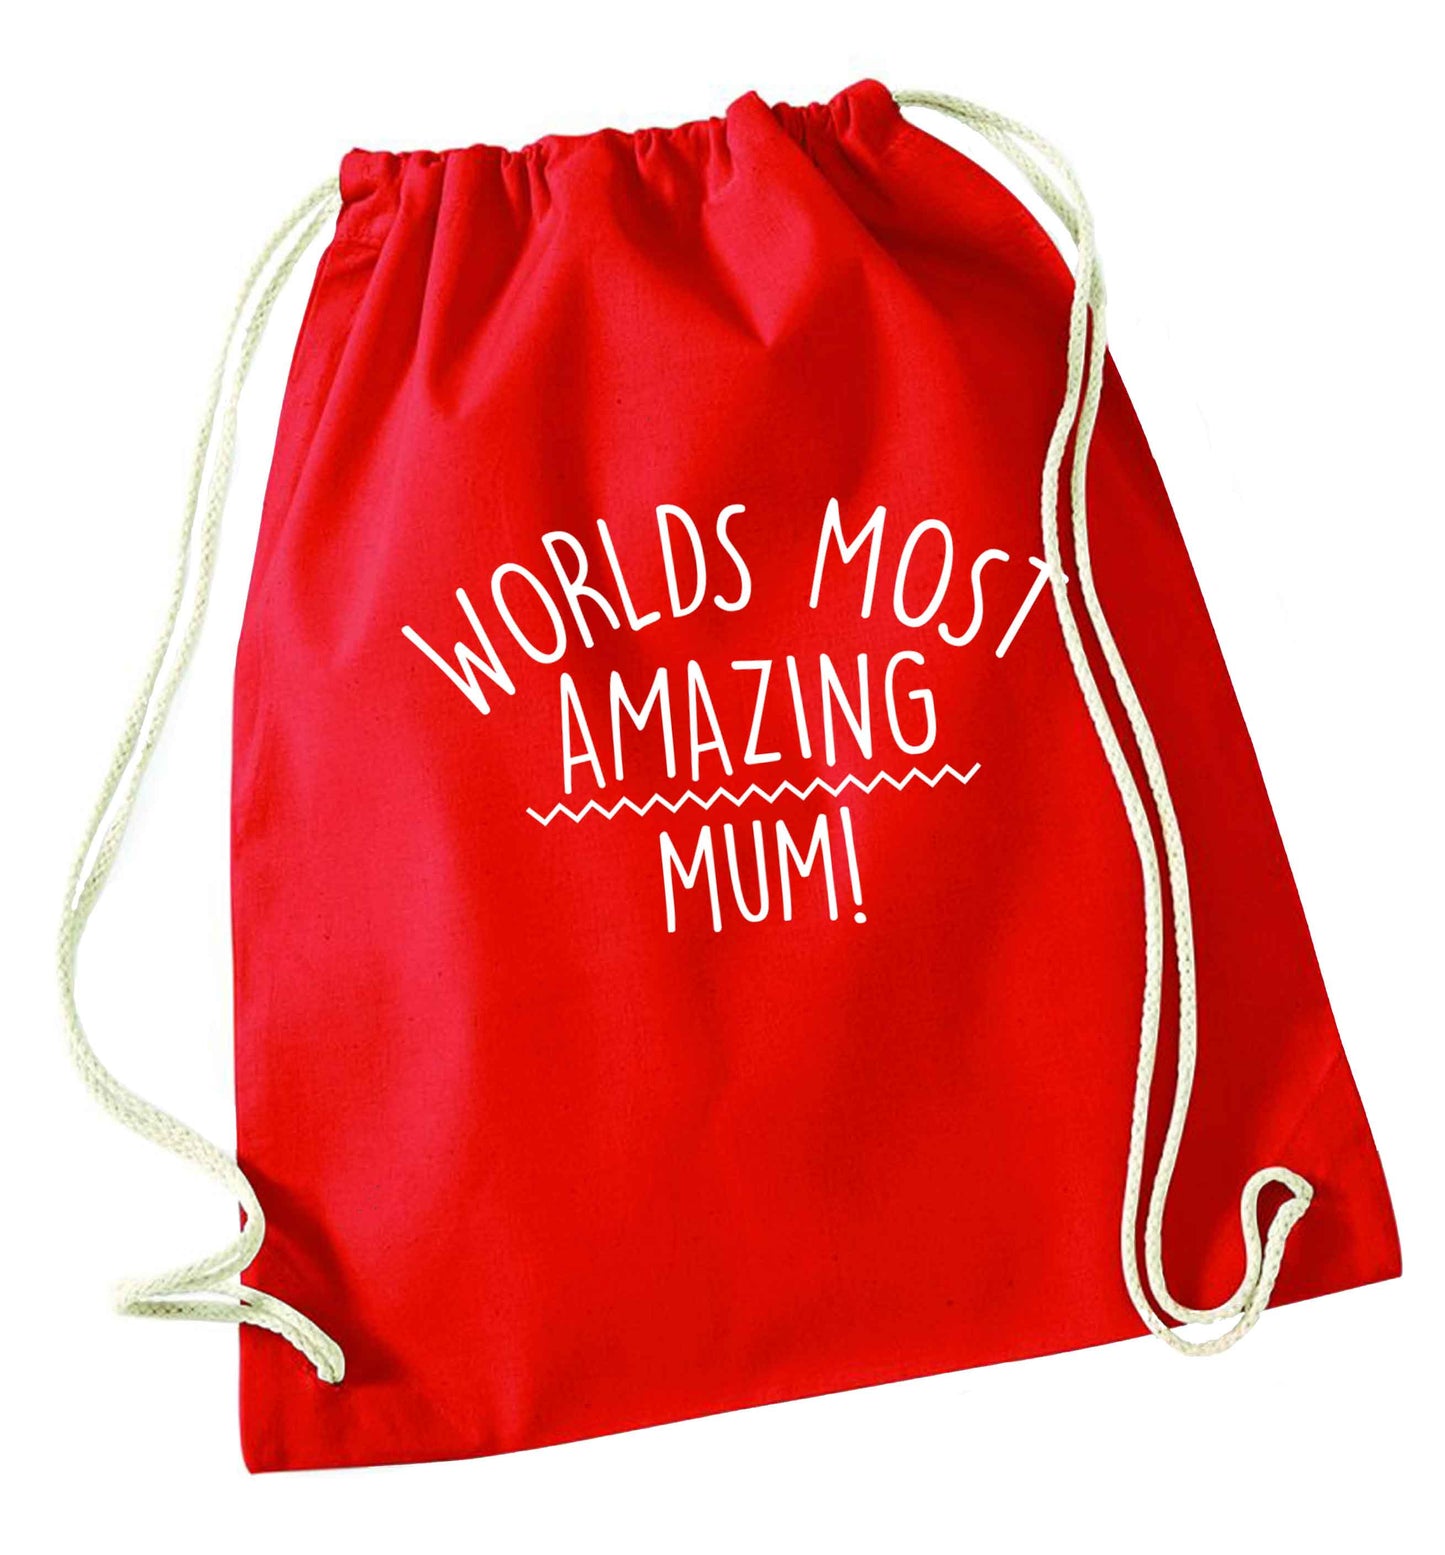 Worlds most amazing mum red drawstring bag 